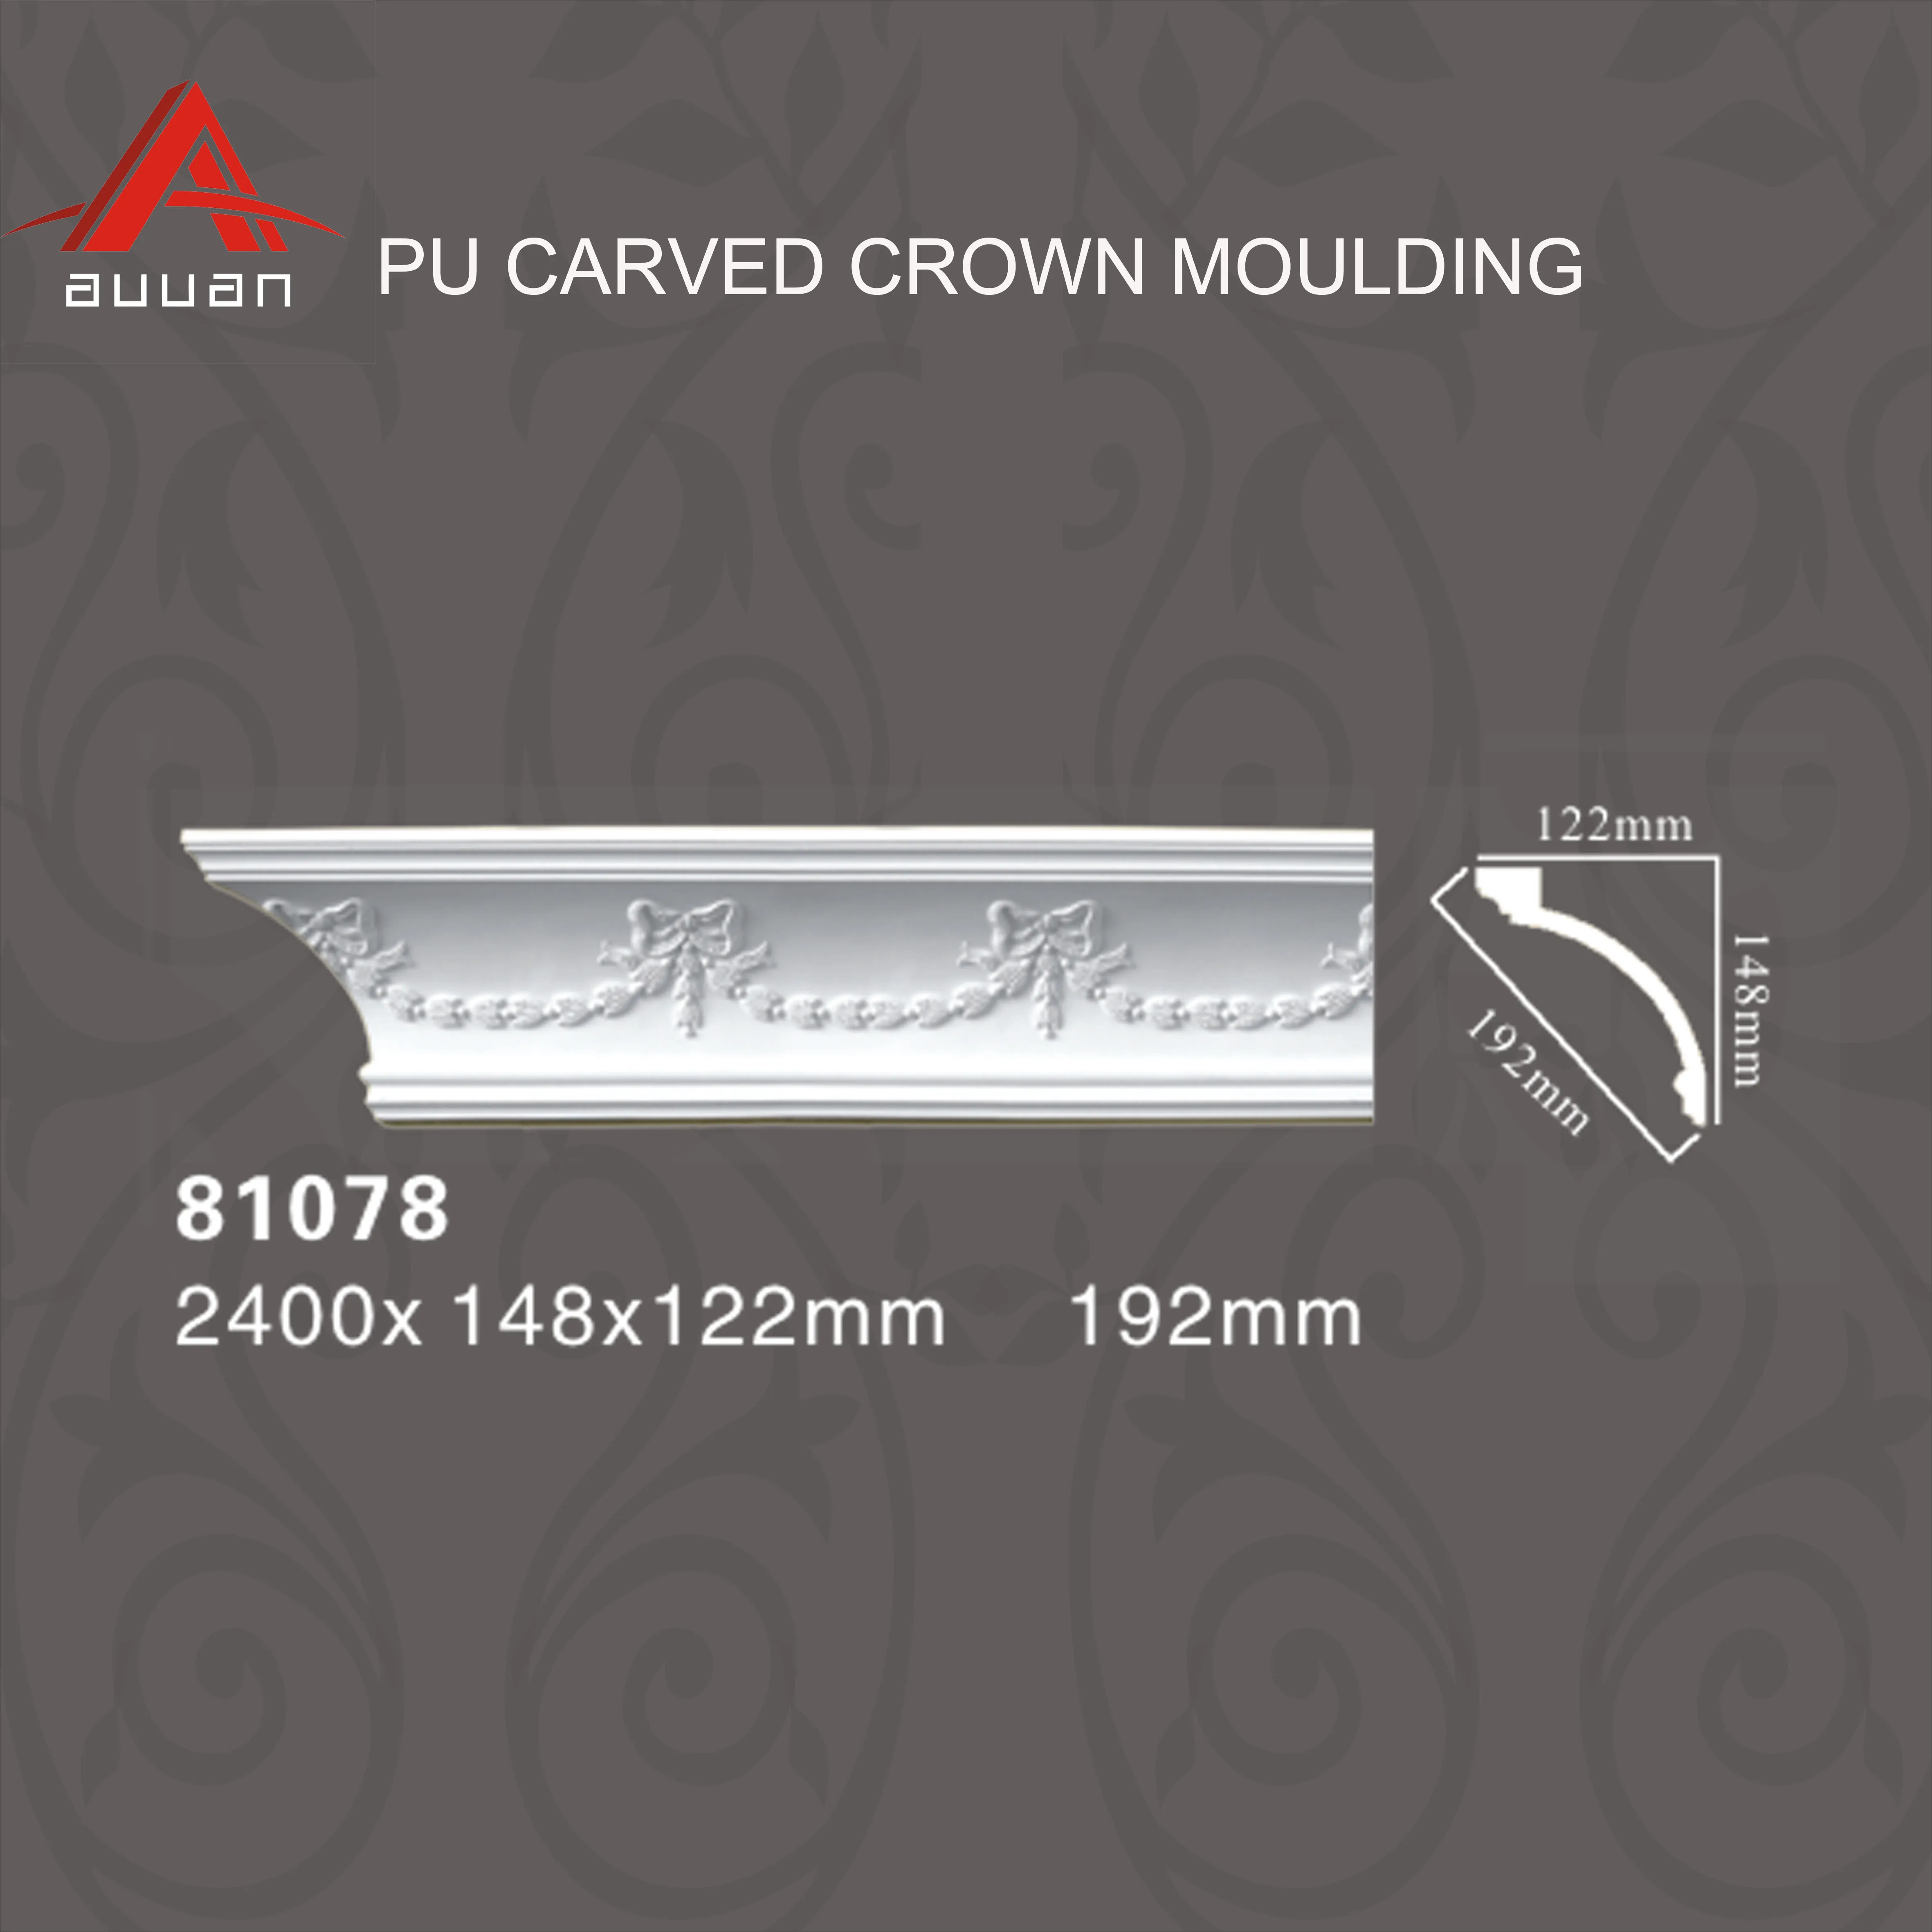 
China Hotsale Polyurethane Decorative Building Material Ceiling Trim Dentil Crown Molding Chair Rail Designs 